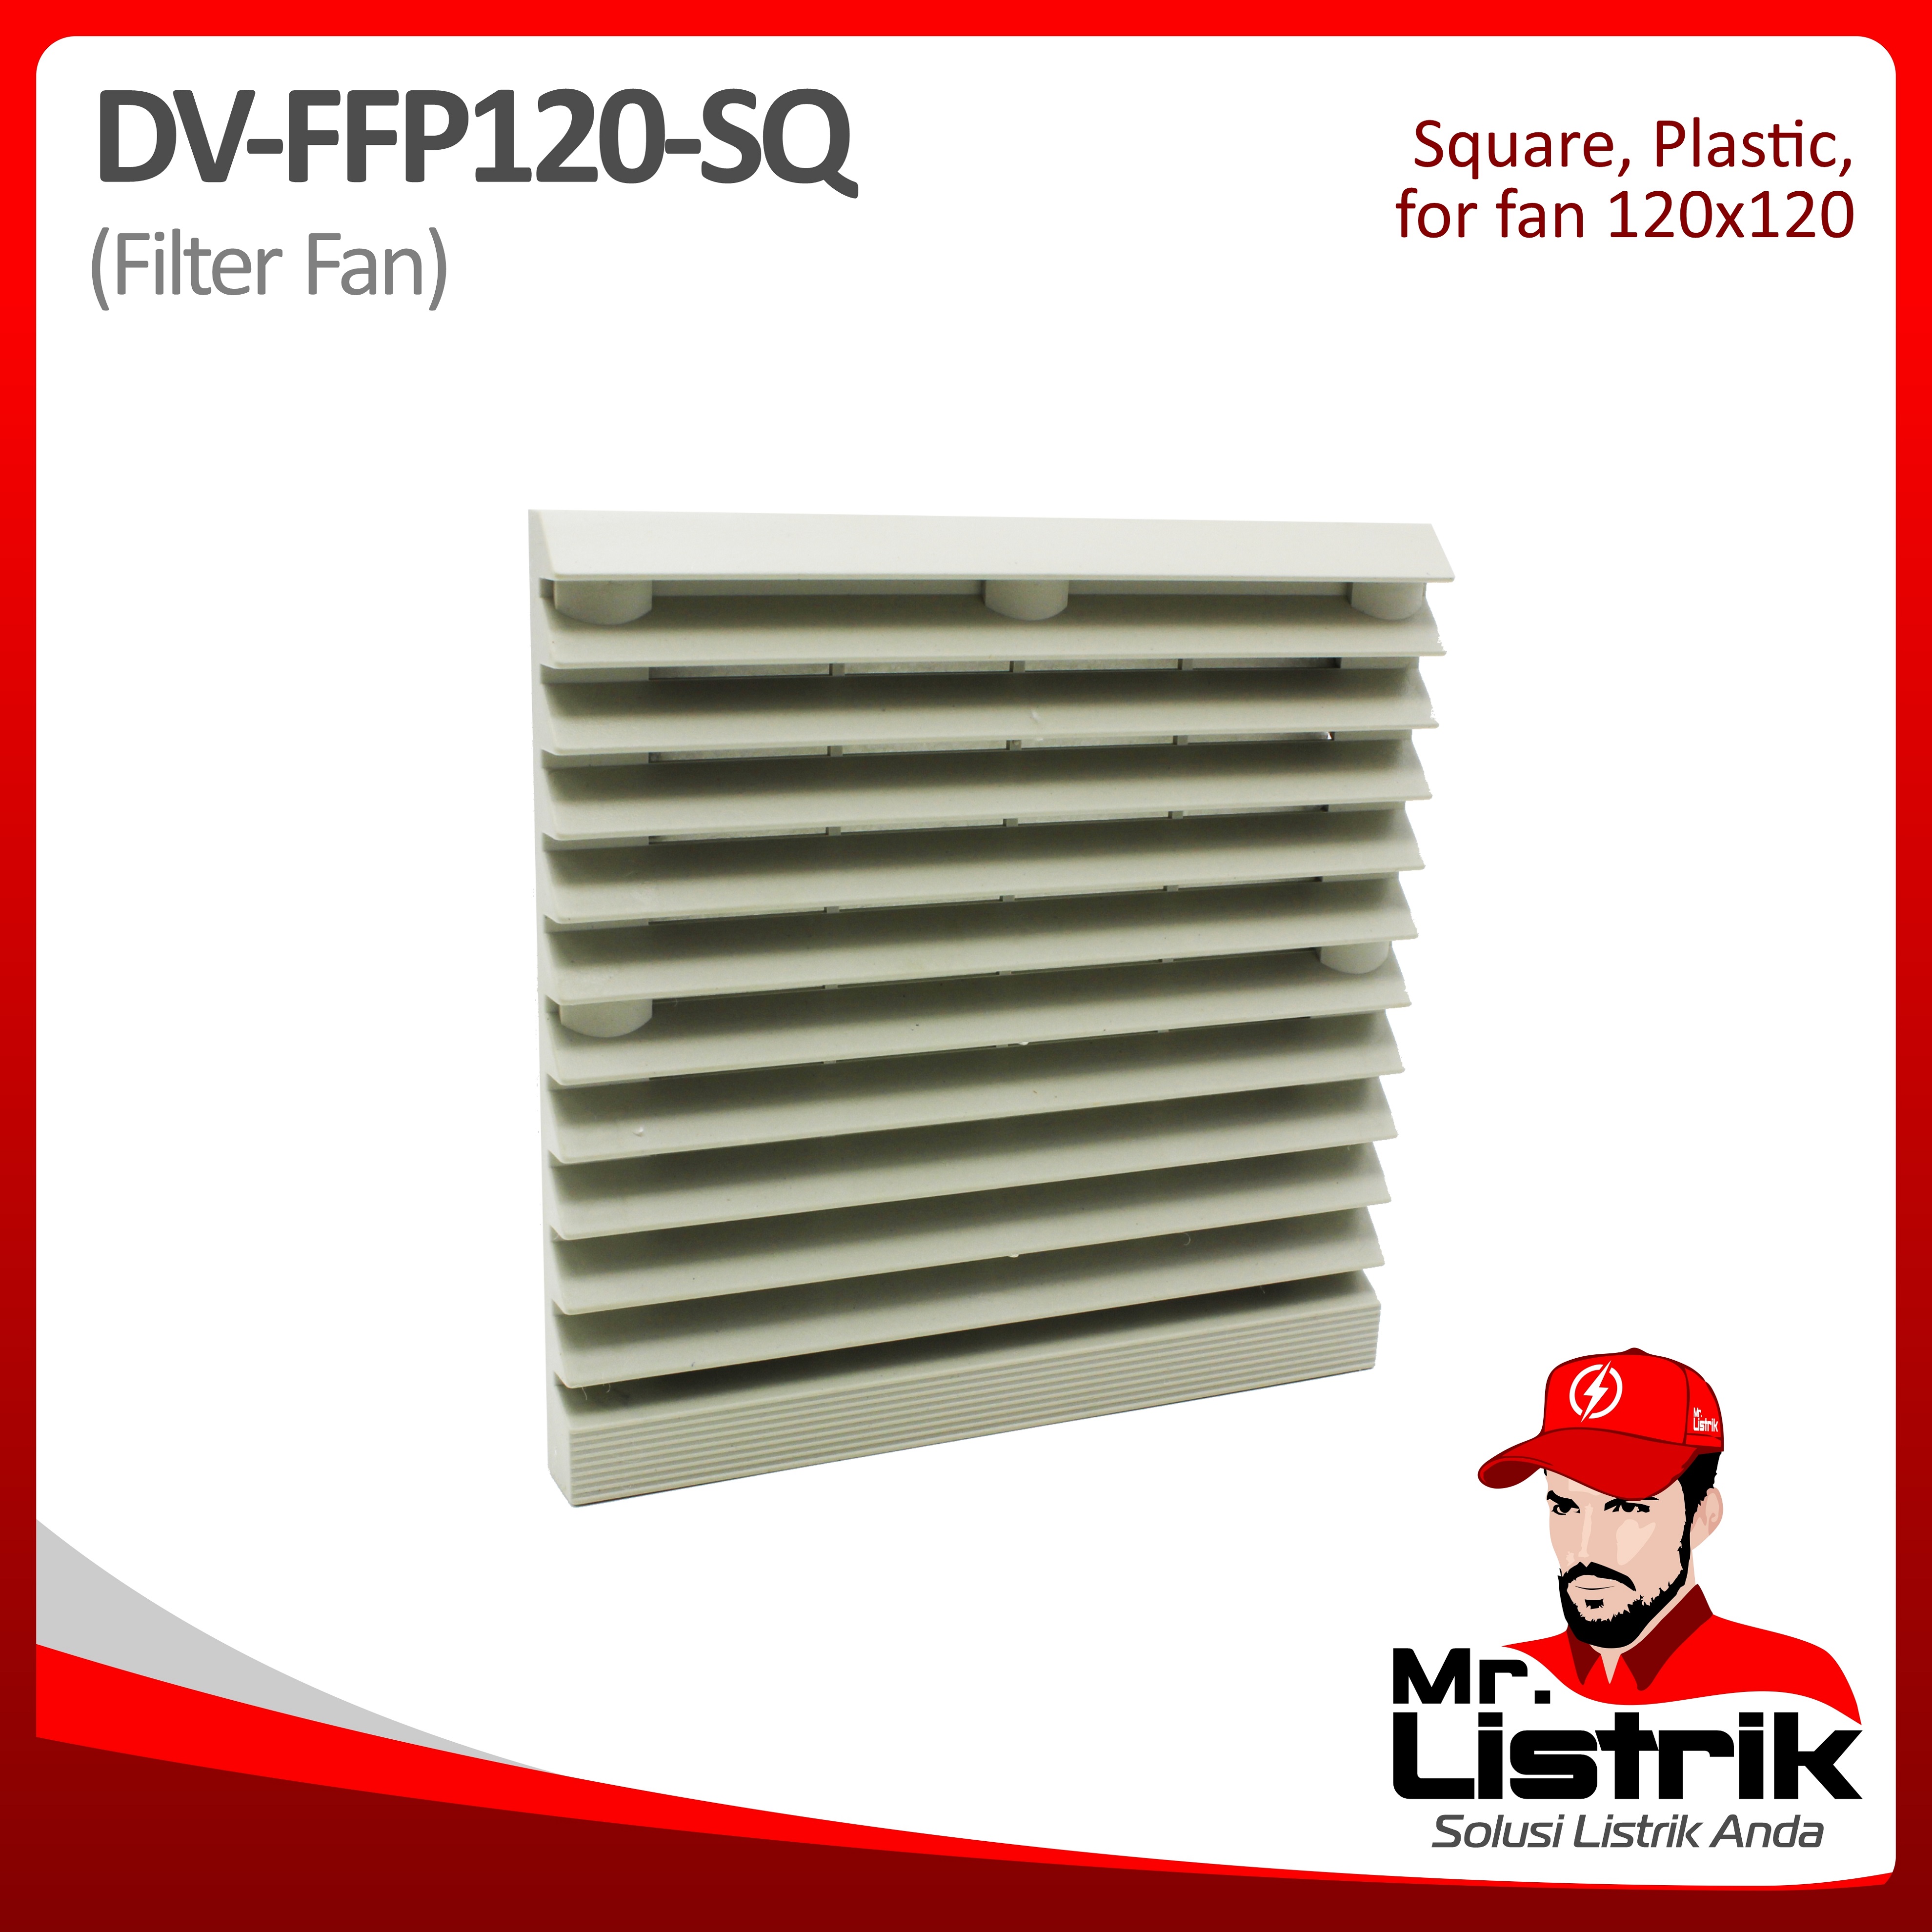 Filter Fan Plastic Square For Fan 120x120 DV FFP120-SQ